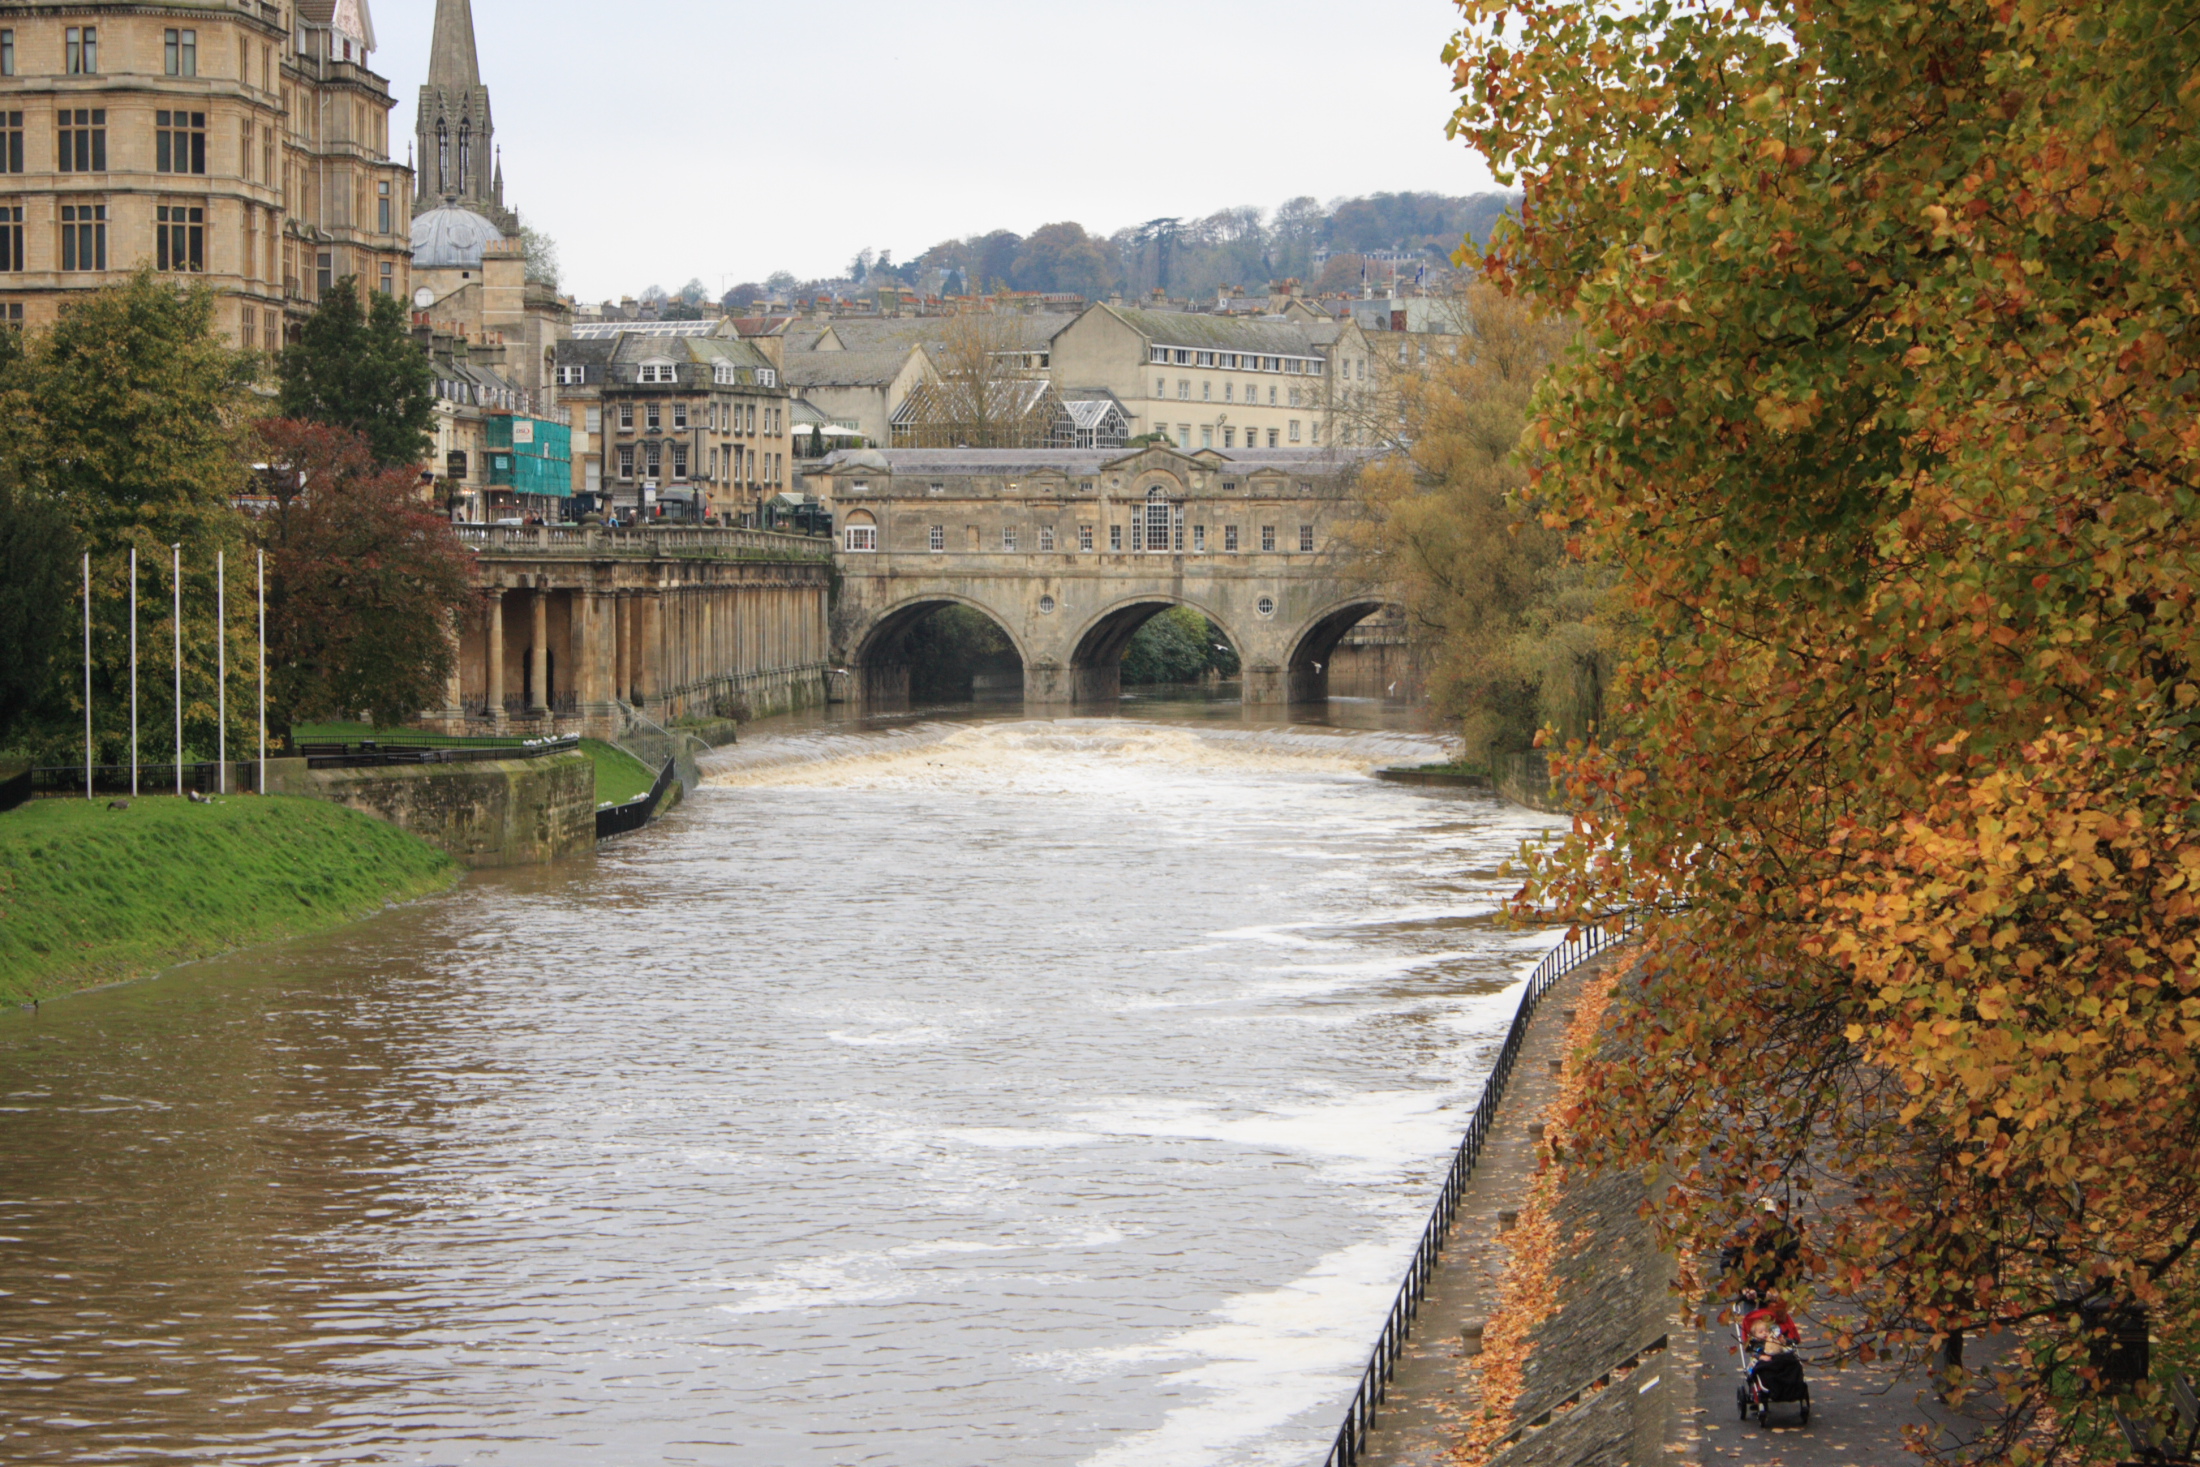 The River in Bath